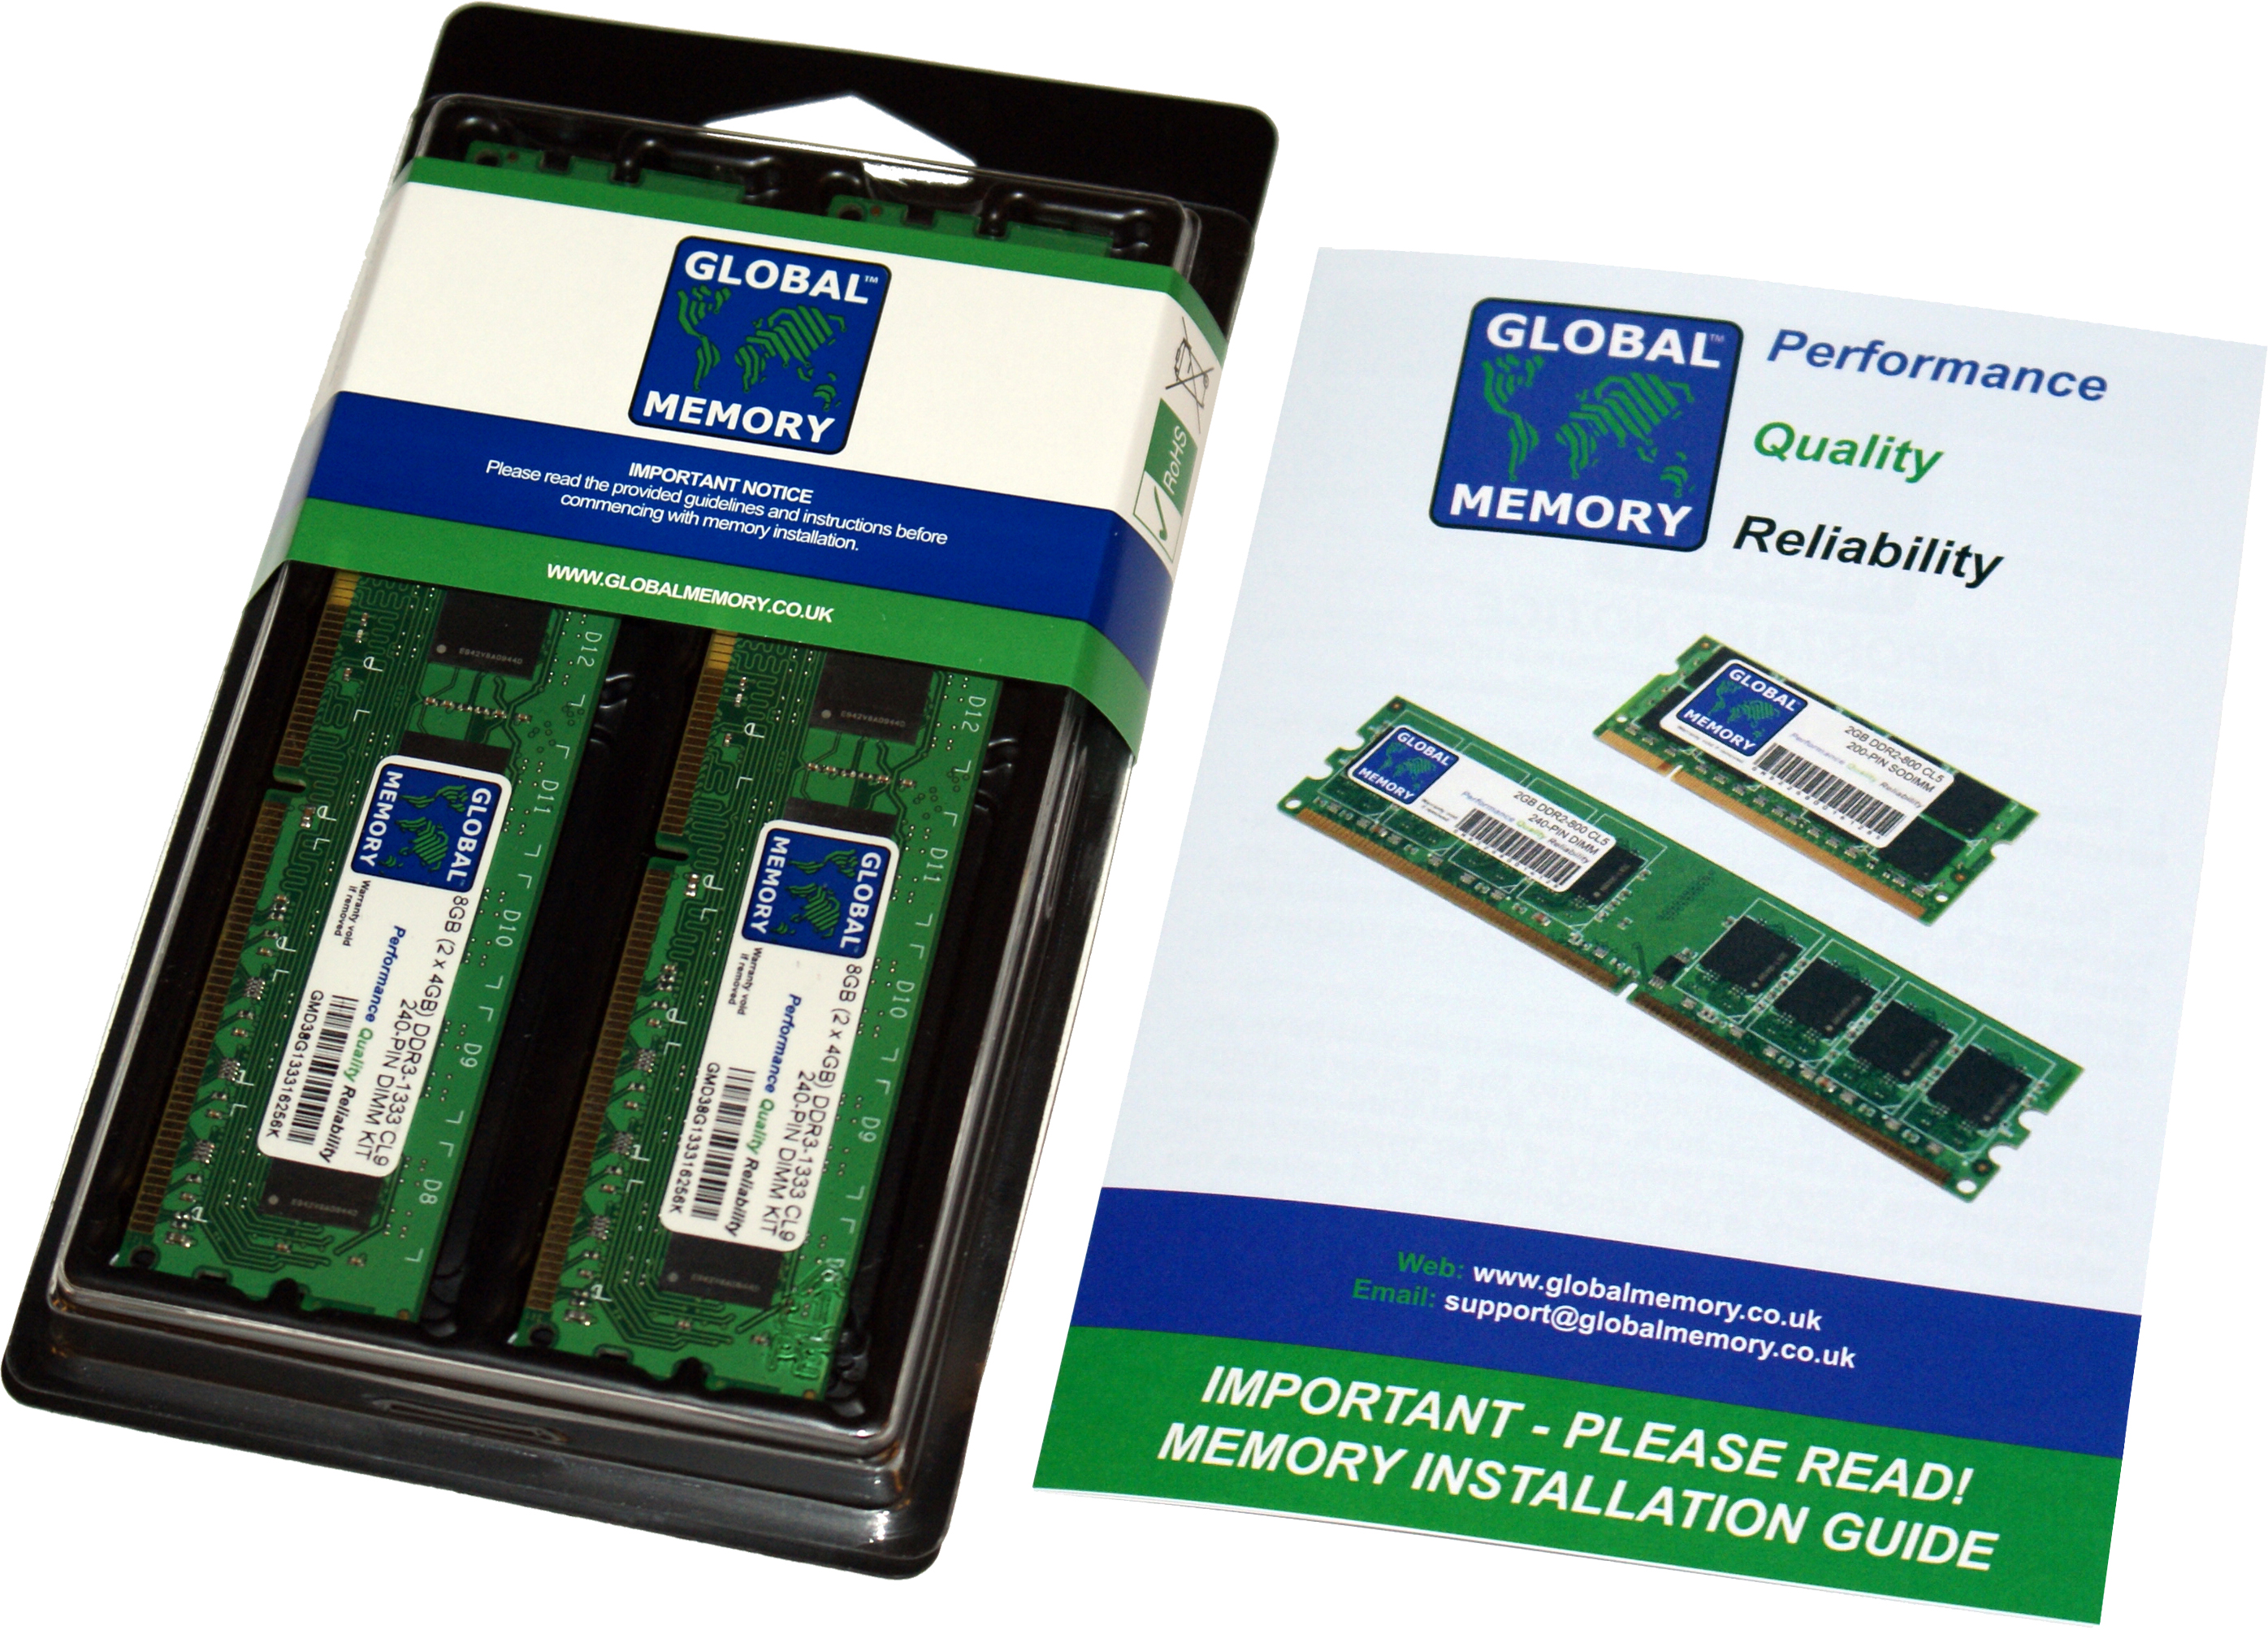 16GB (2 x 8GB) DDR3 1866MHz PC3-14900 240-PIN DIMM MEMORY RAM KIT FOR PC DESKTOPS/MOTHERBOARDS